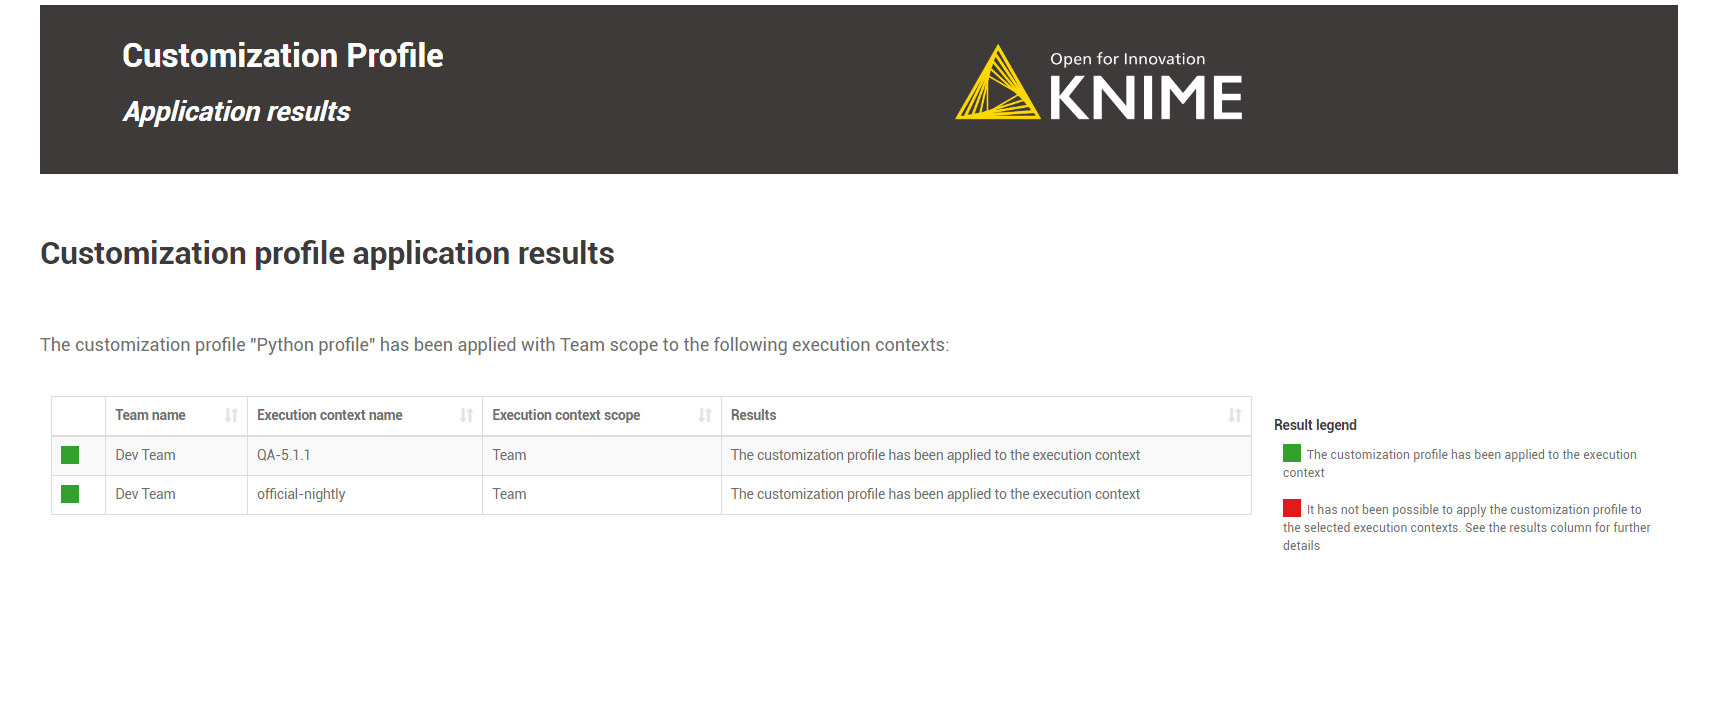 img customization profile apply team admin results